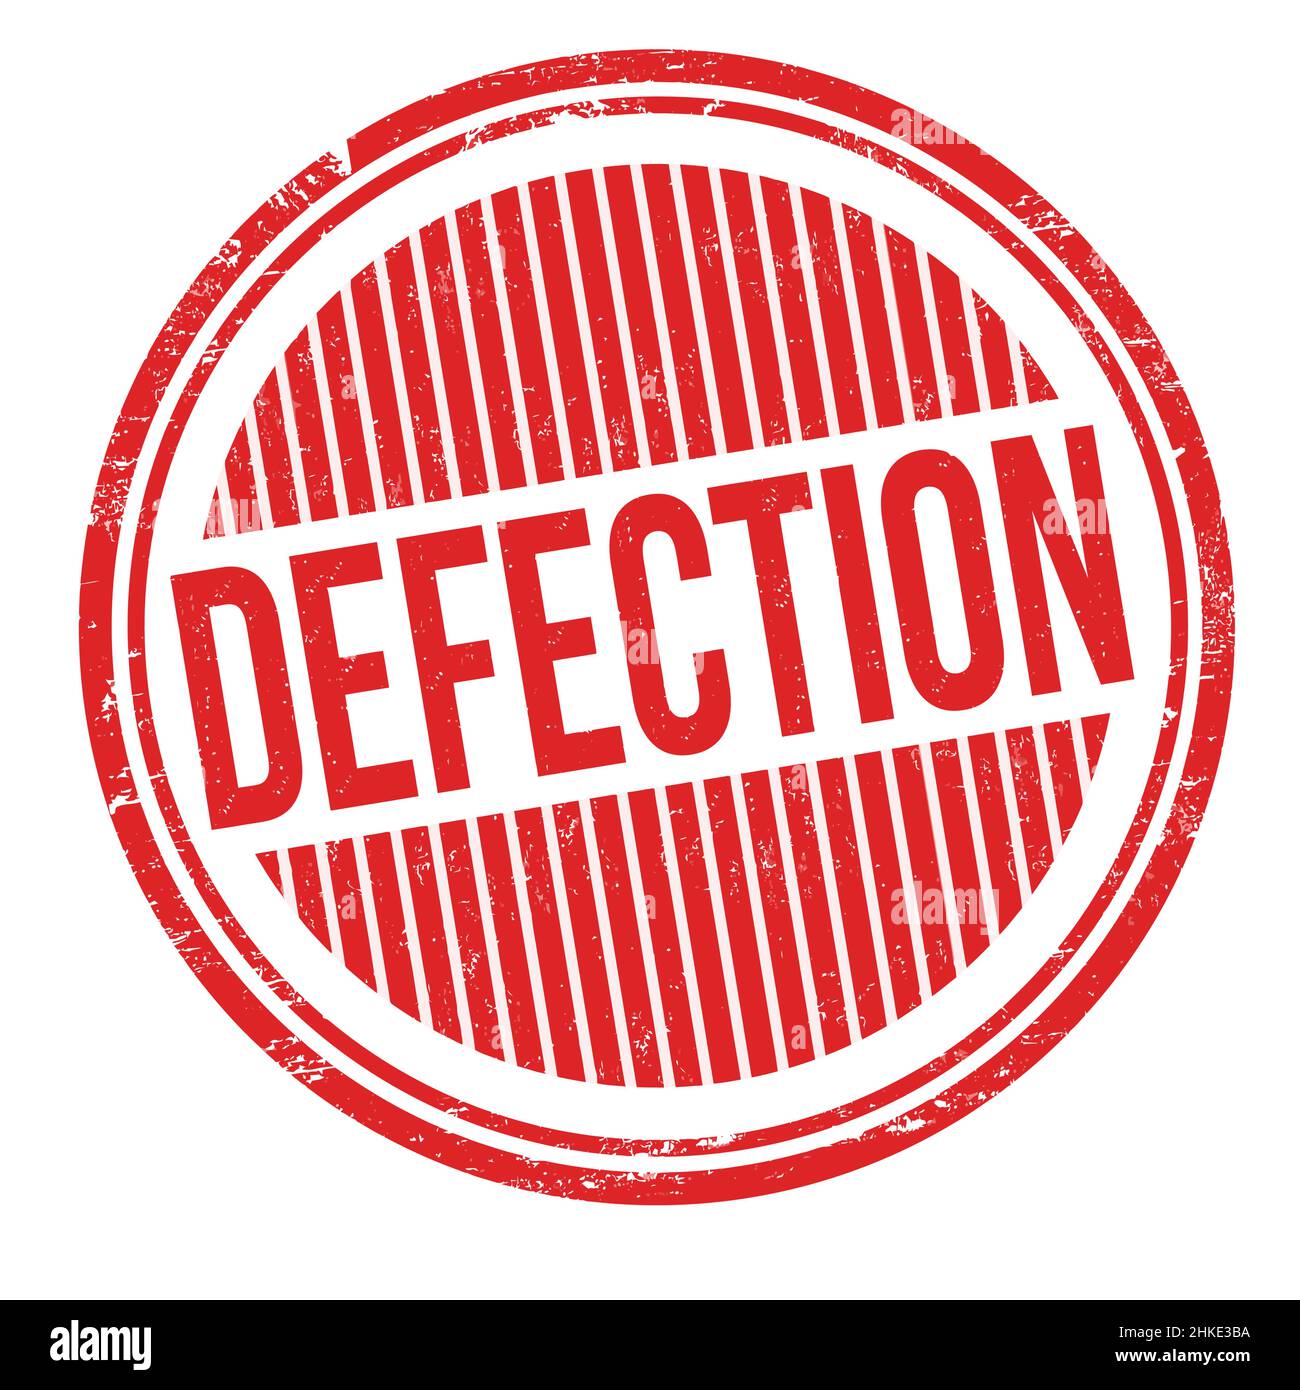 Defection grunge rubber stamp on white background, vector illustration Stock Vector